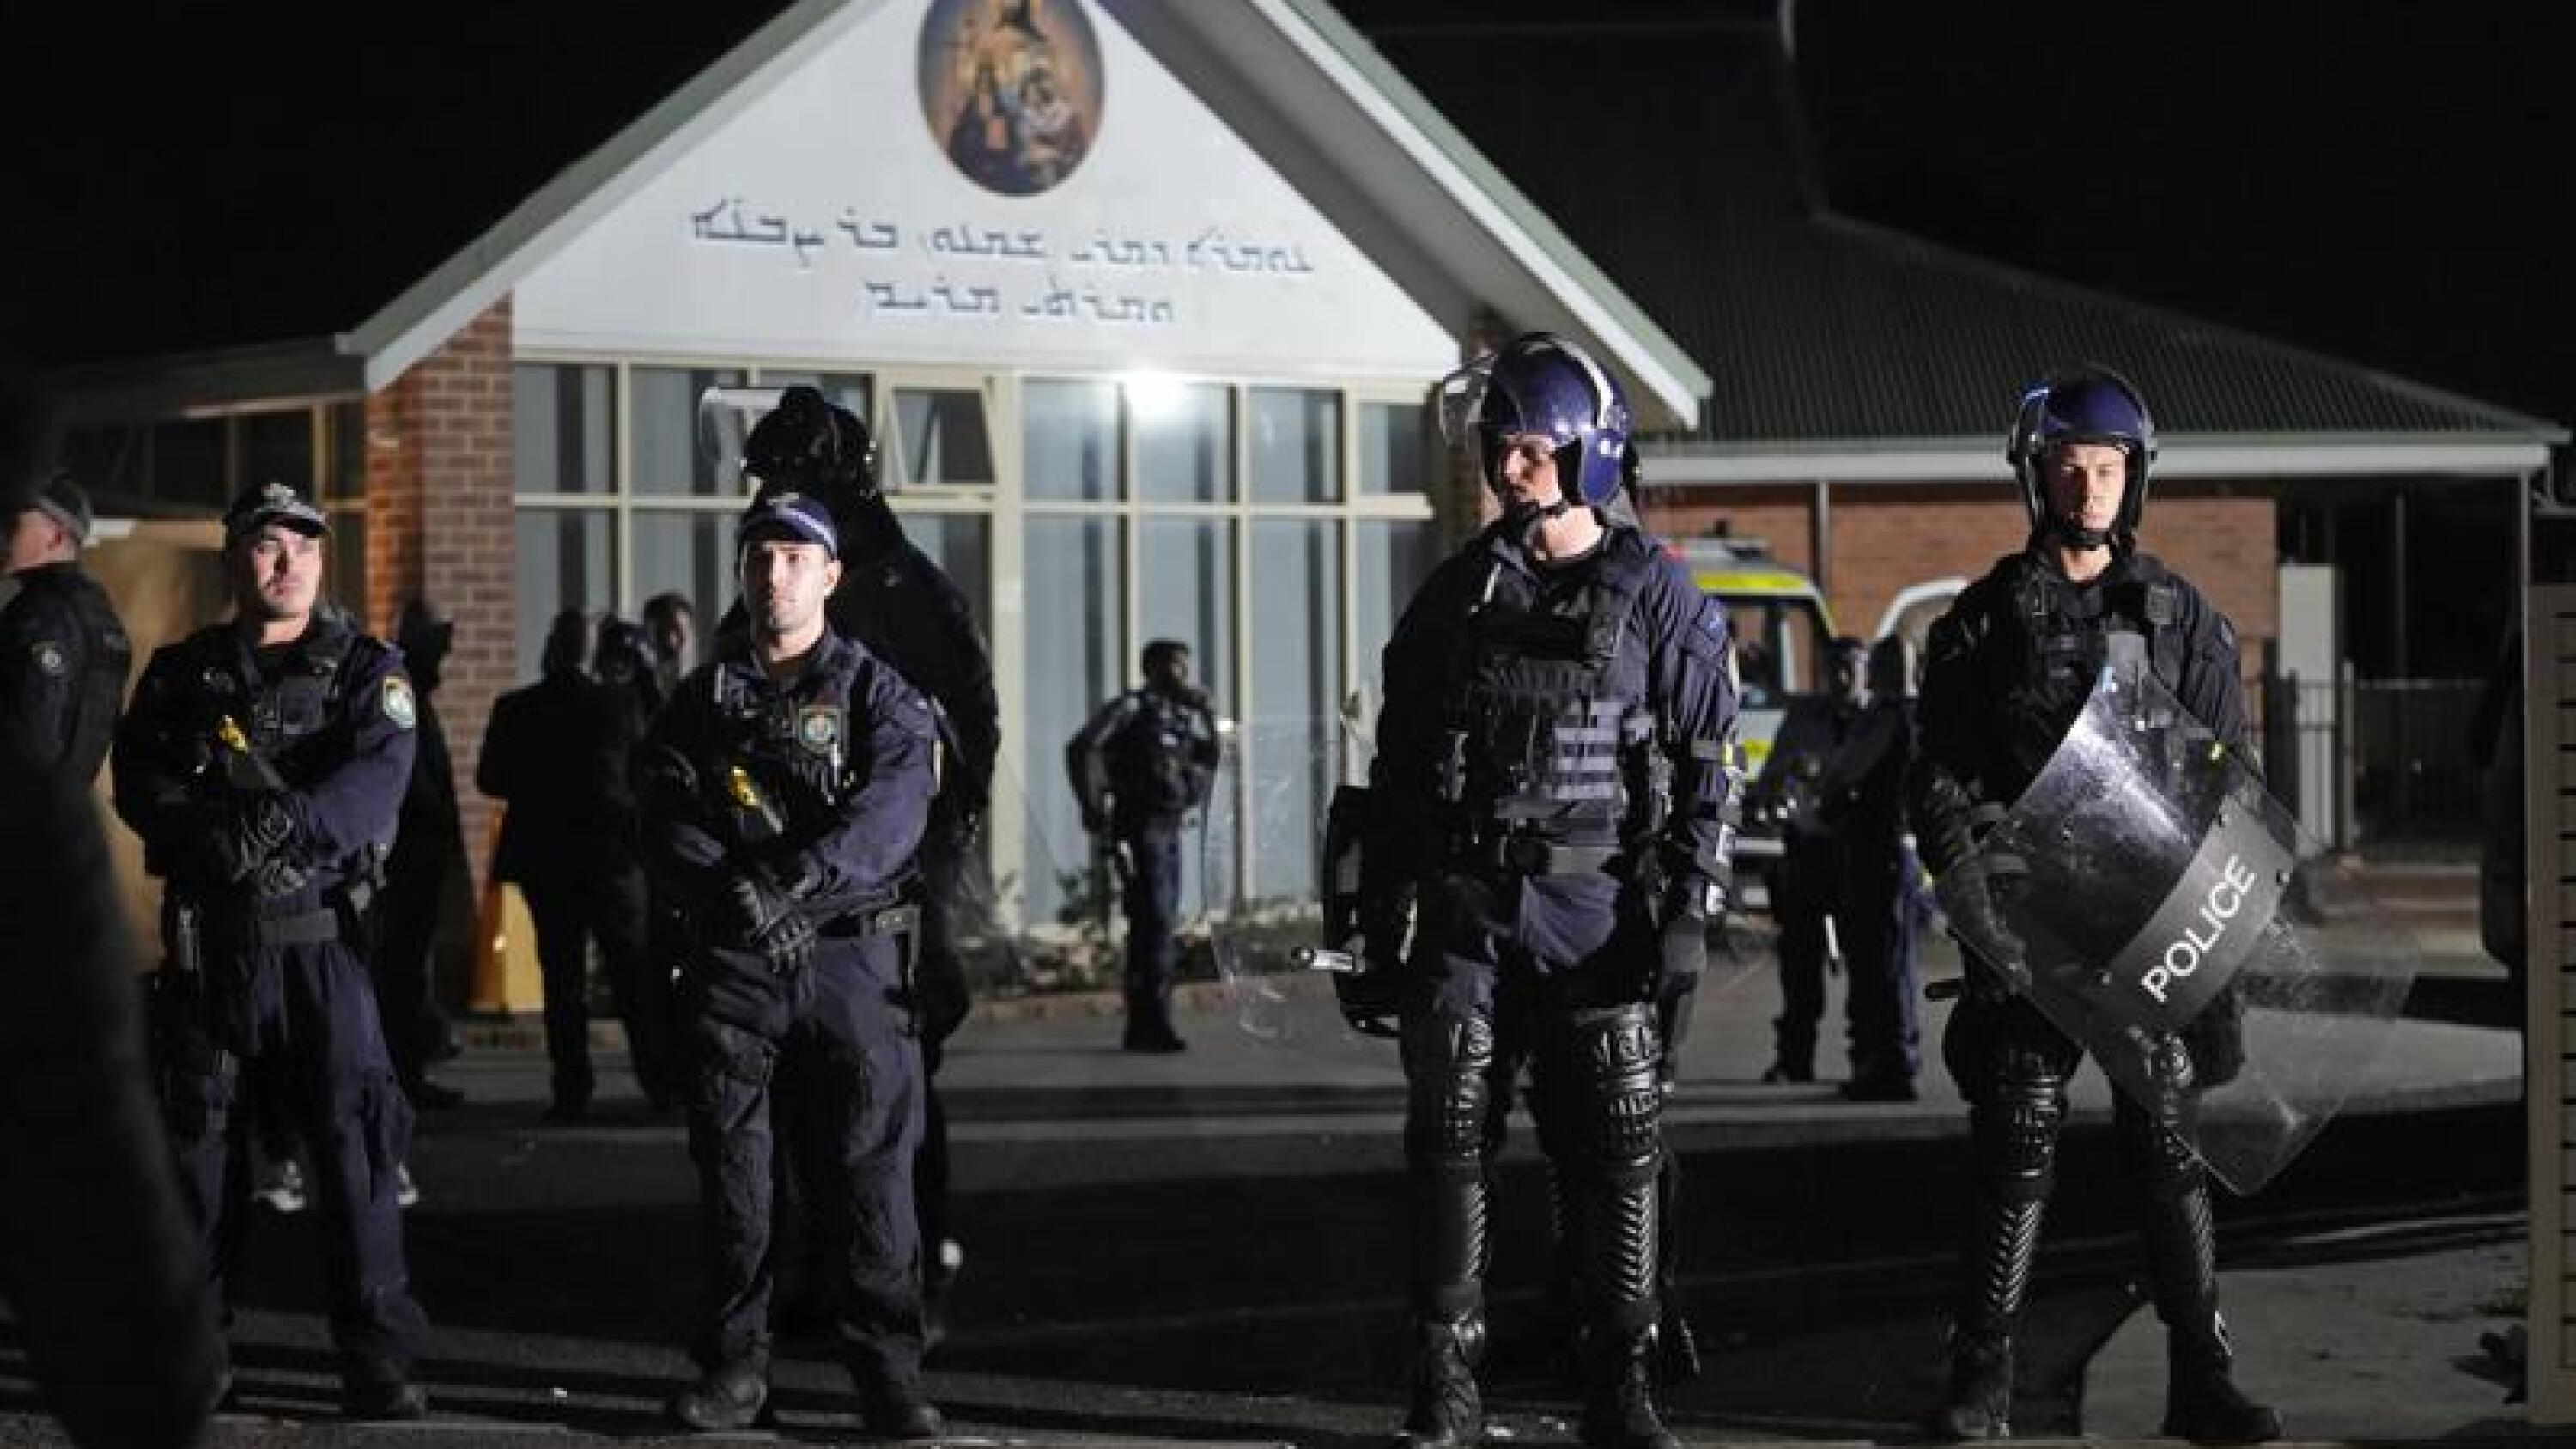 Knife attack in Australia against bishop, priest being treated as terrorism